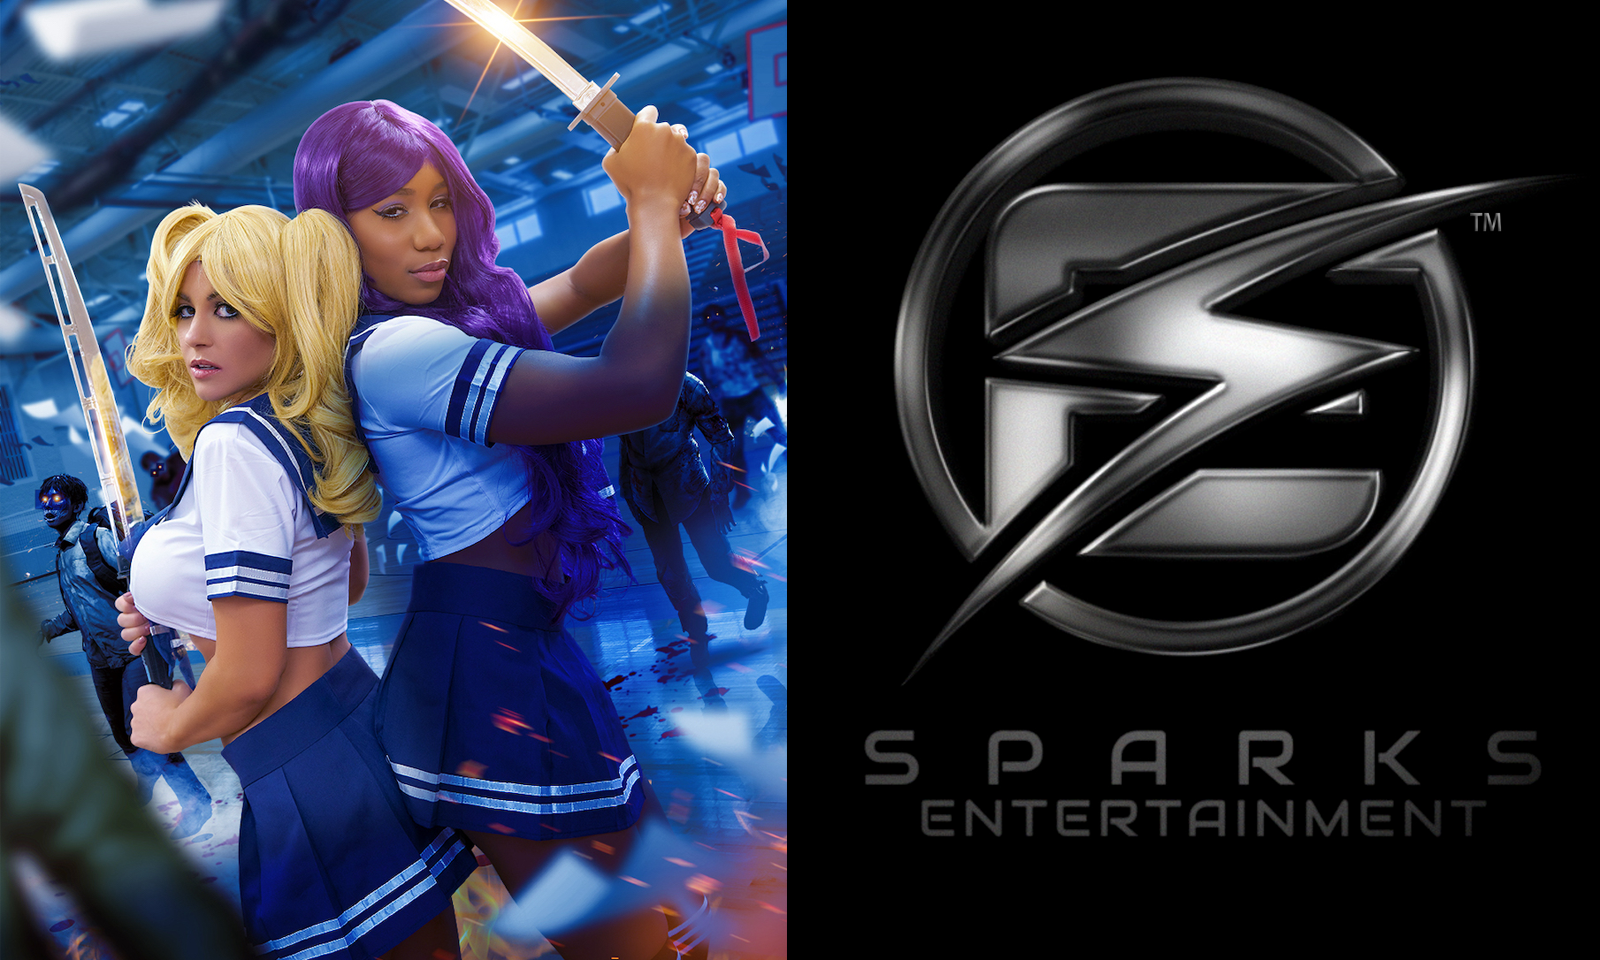 Sparks Entertainment Pits 'Schoolgirls vs. Zombies'